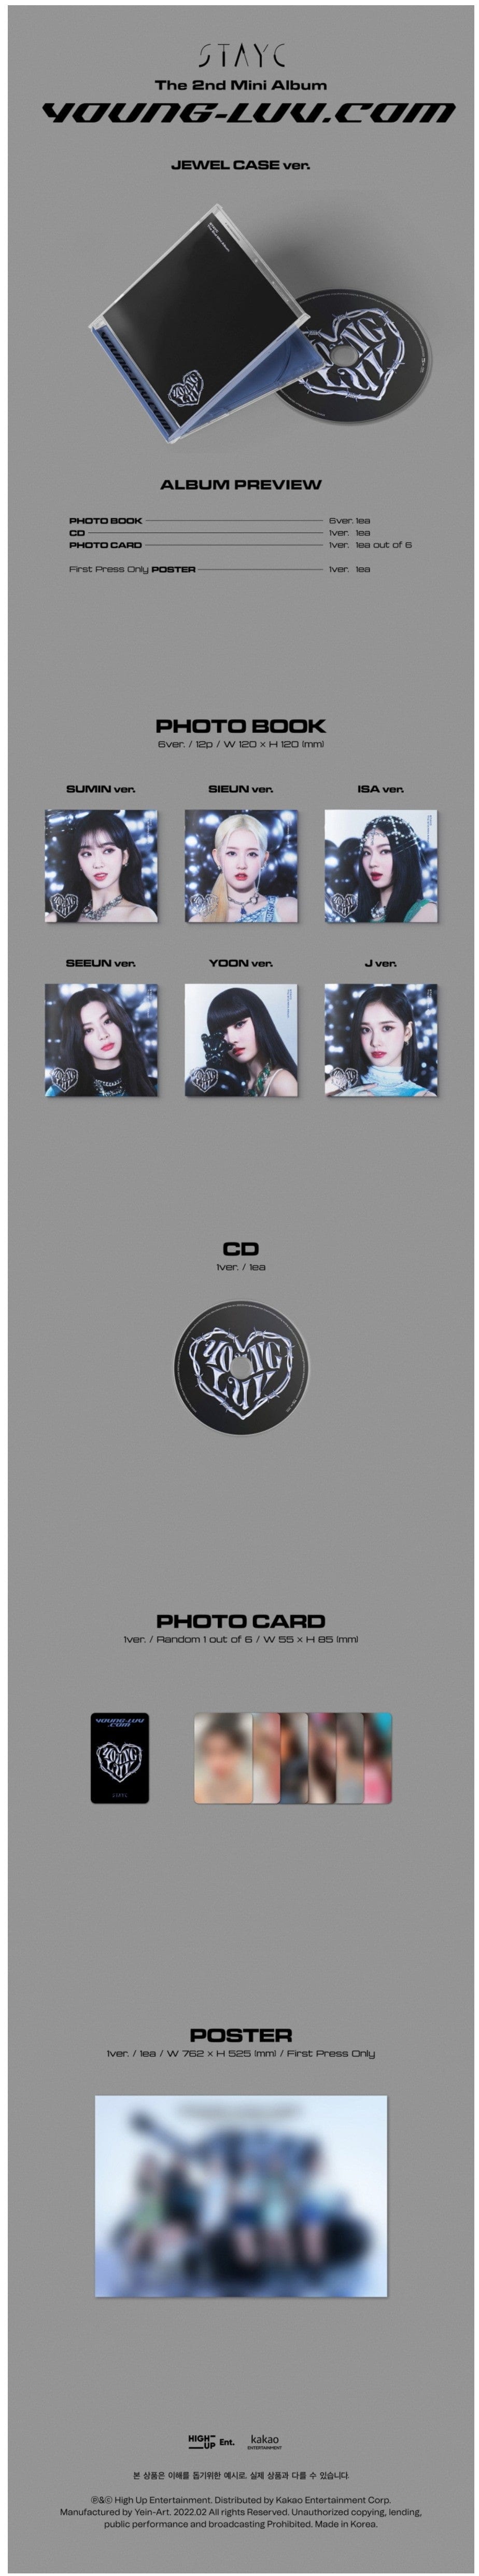 Korea Pop Store STAYC - YOUNG-LUV.COM (2ND MINI ALBUM) (Jewel Case VER.) Kawaii Gifts